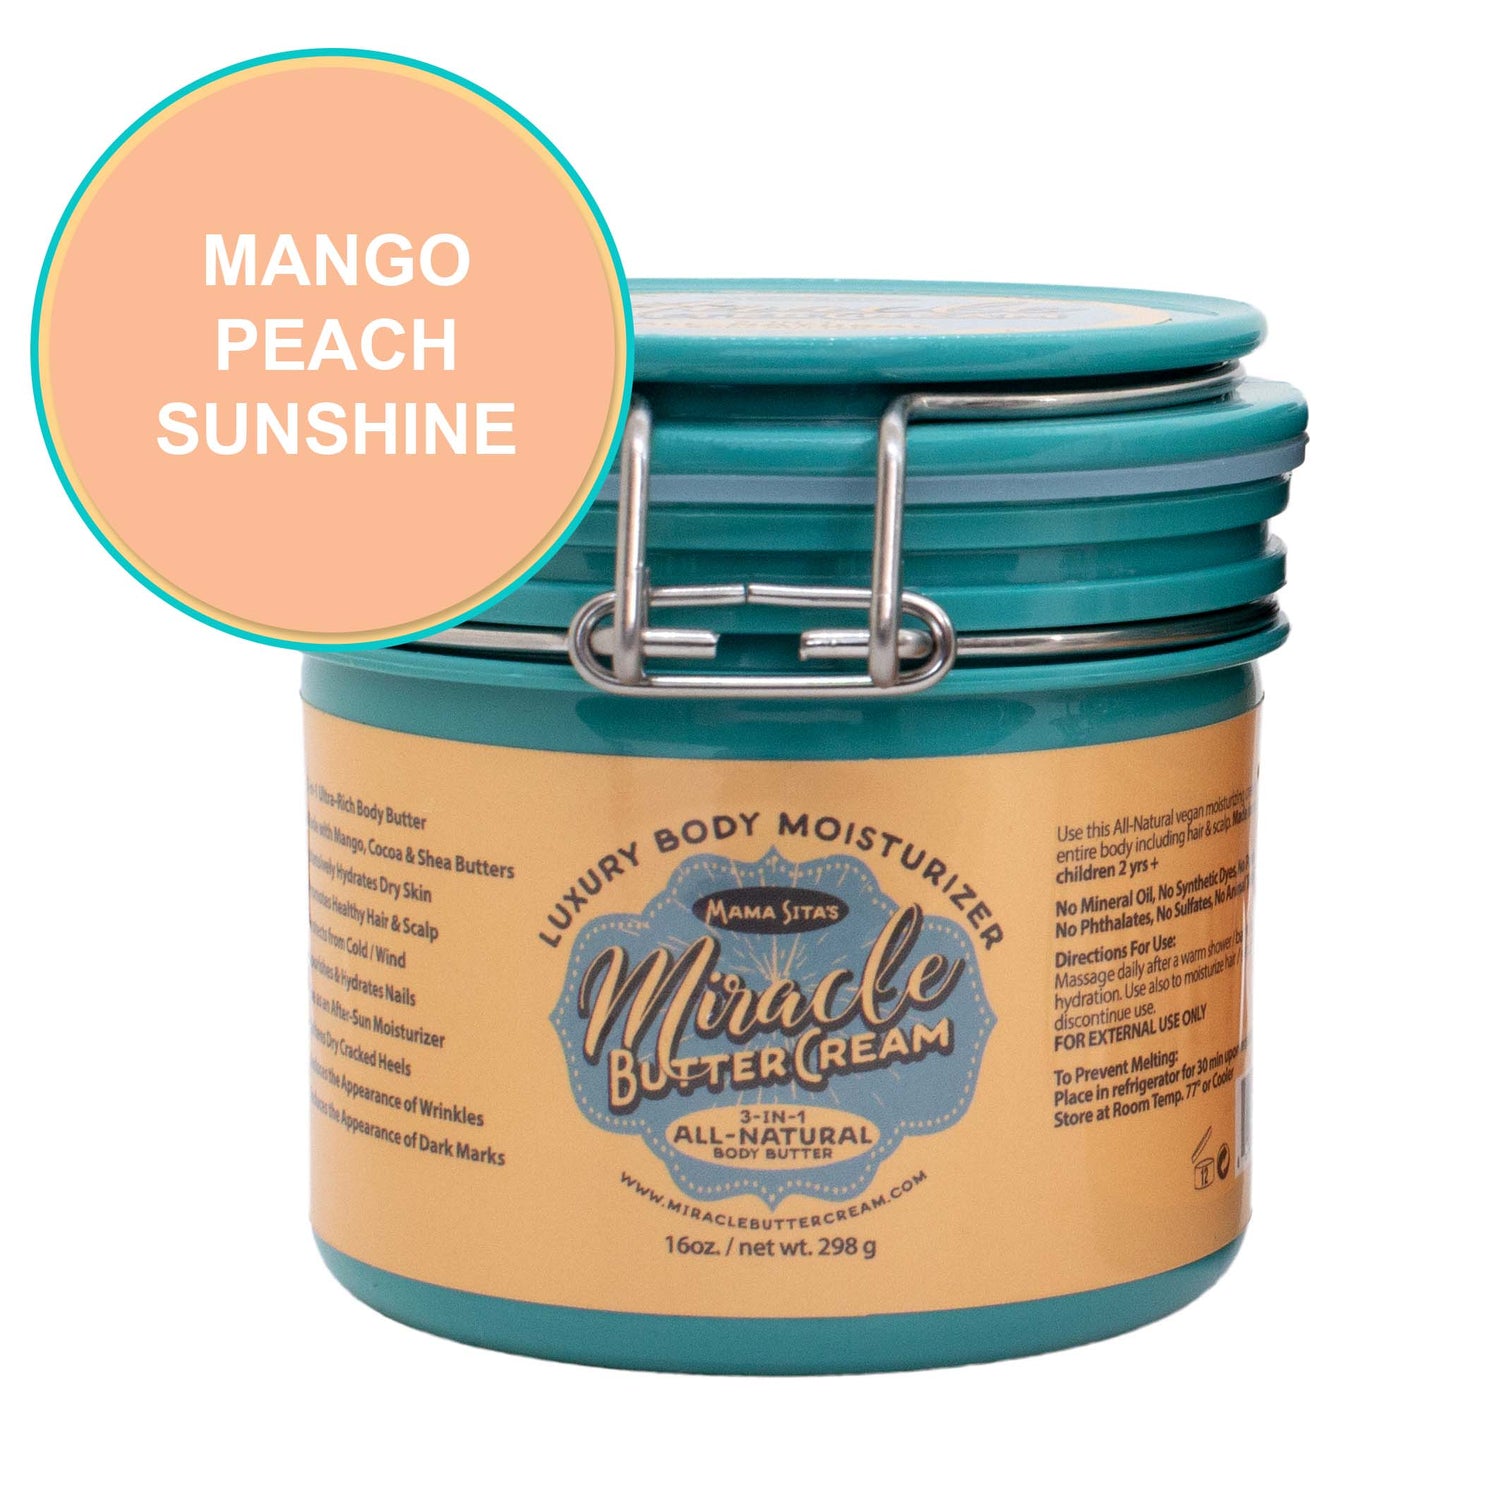 Mango Peach Sunshine Miracle Butter Cream